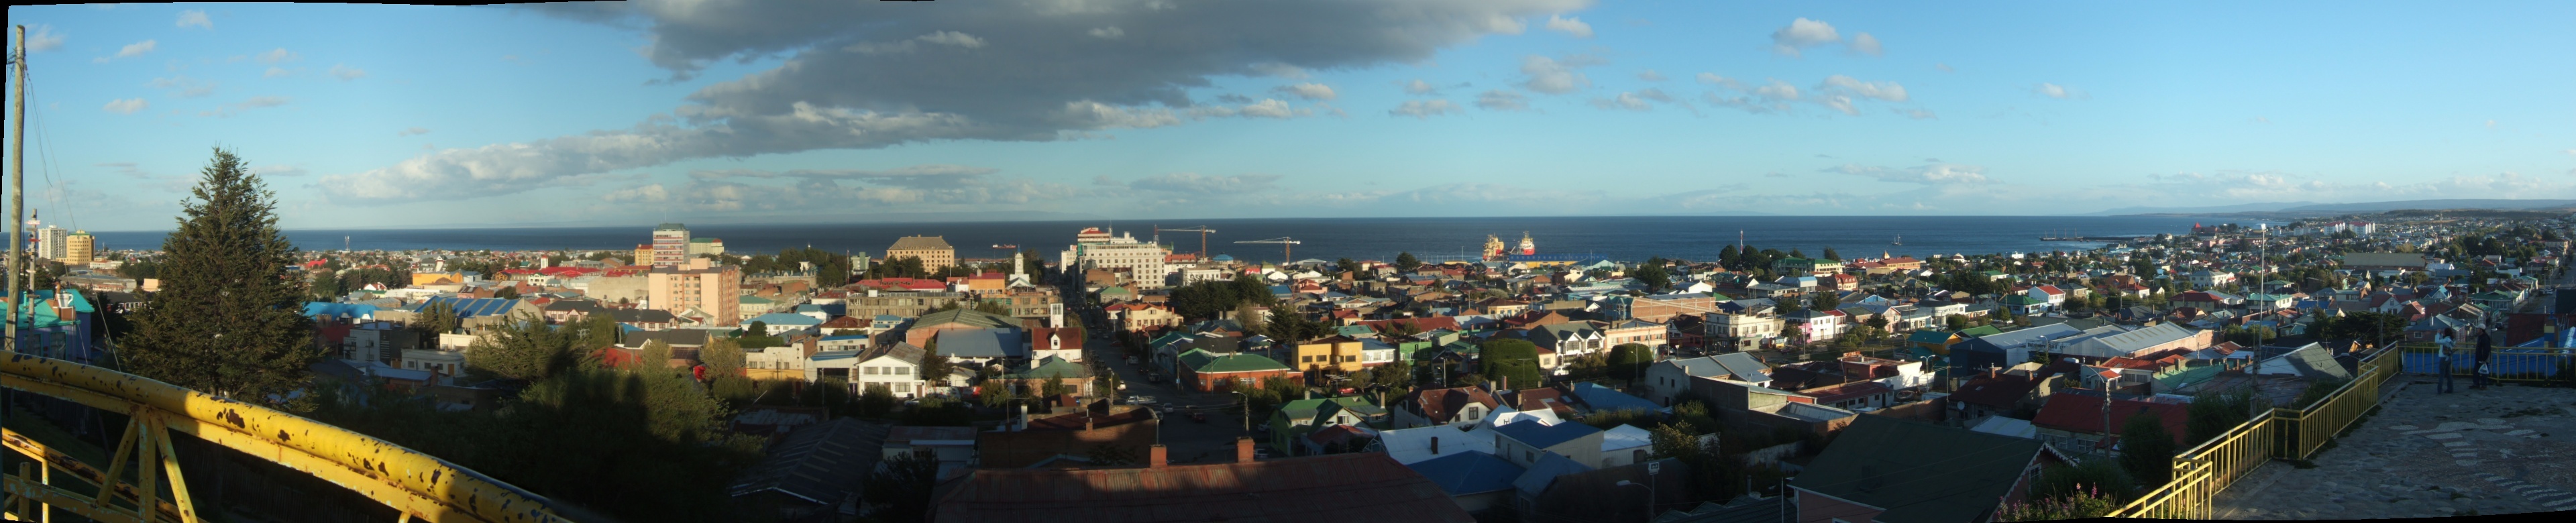 Punta Arenas panorama.jpg